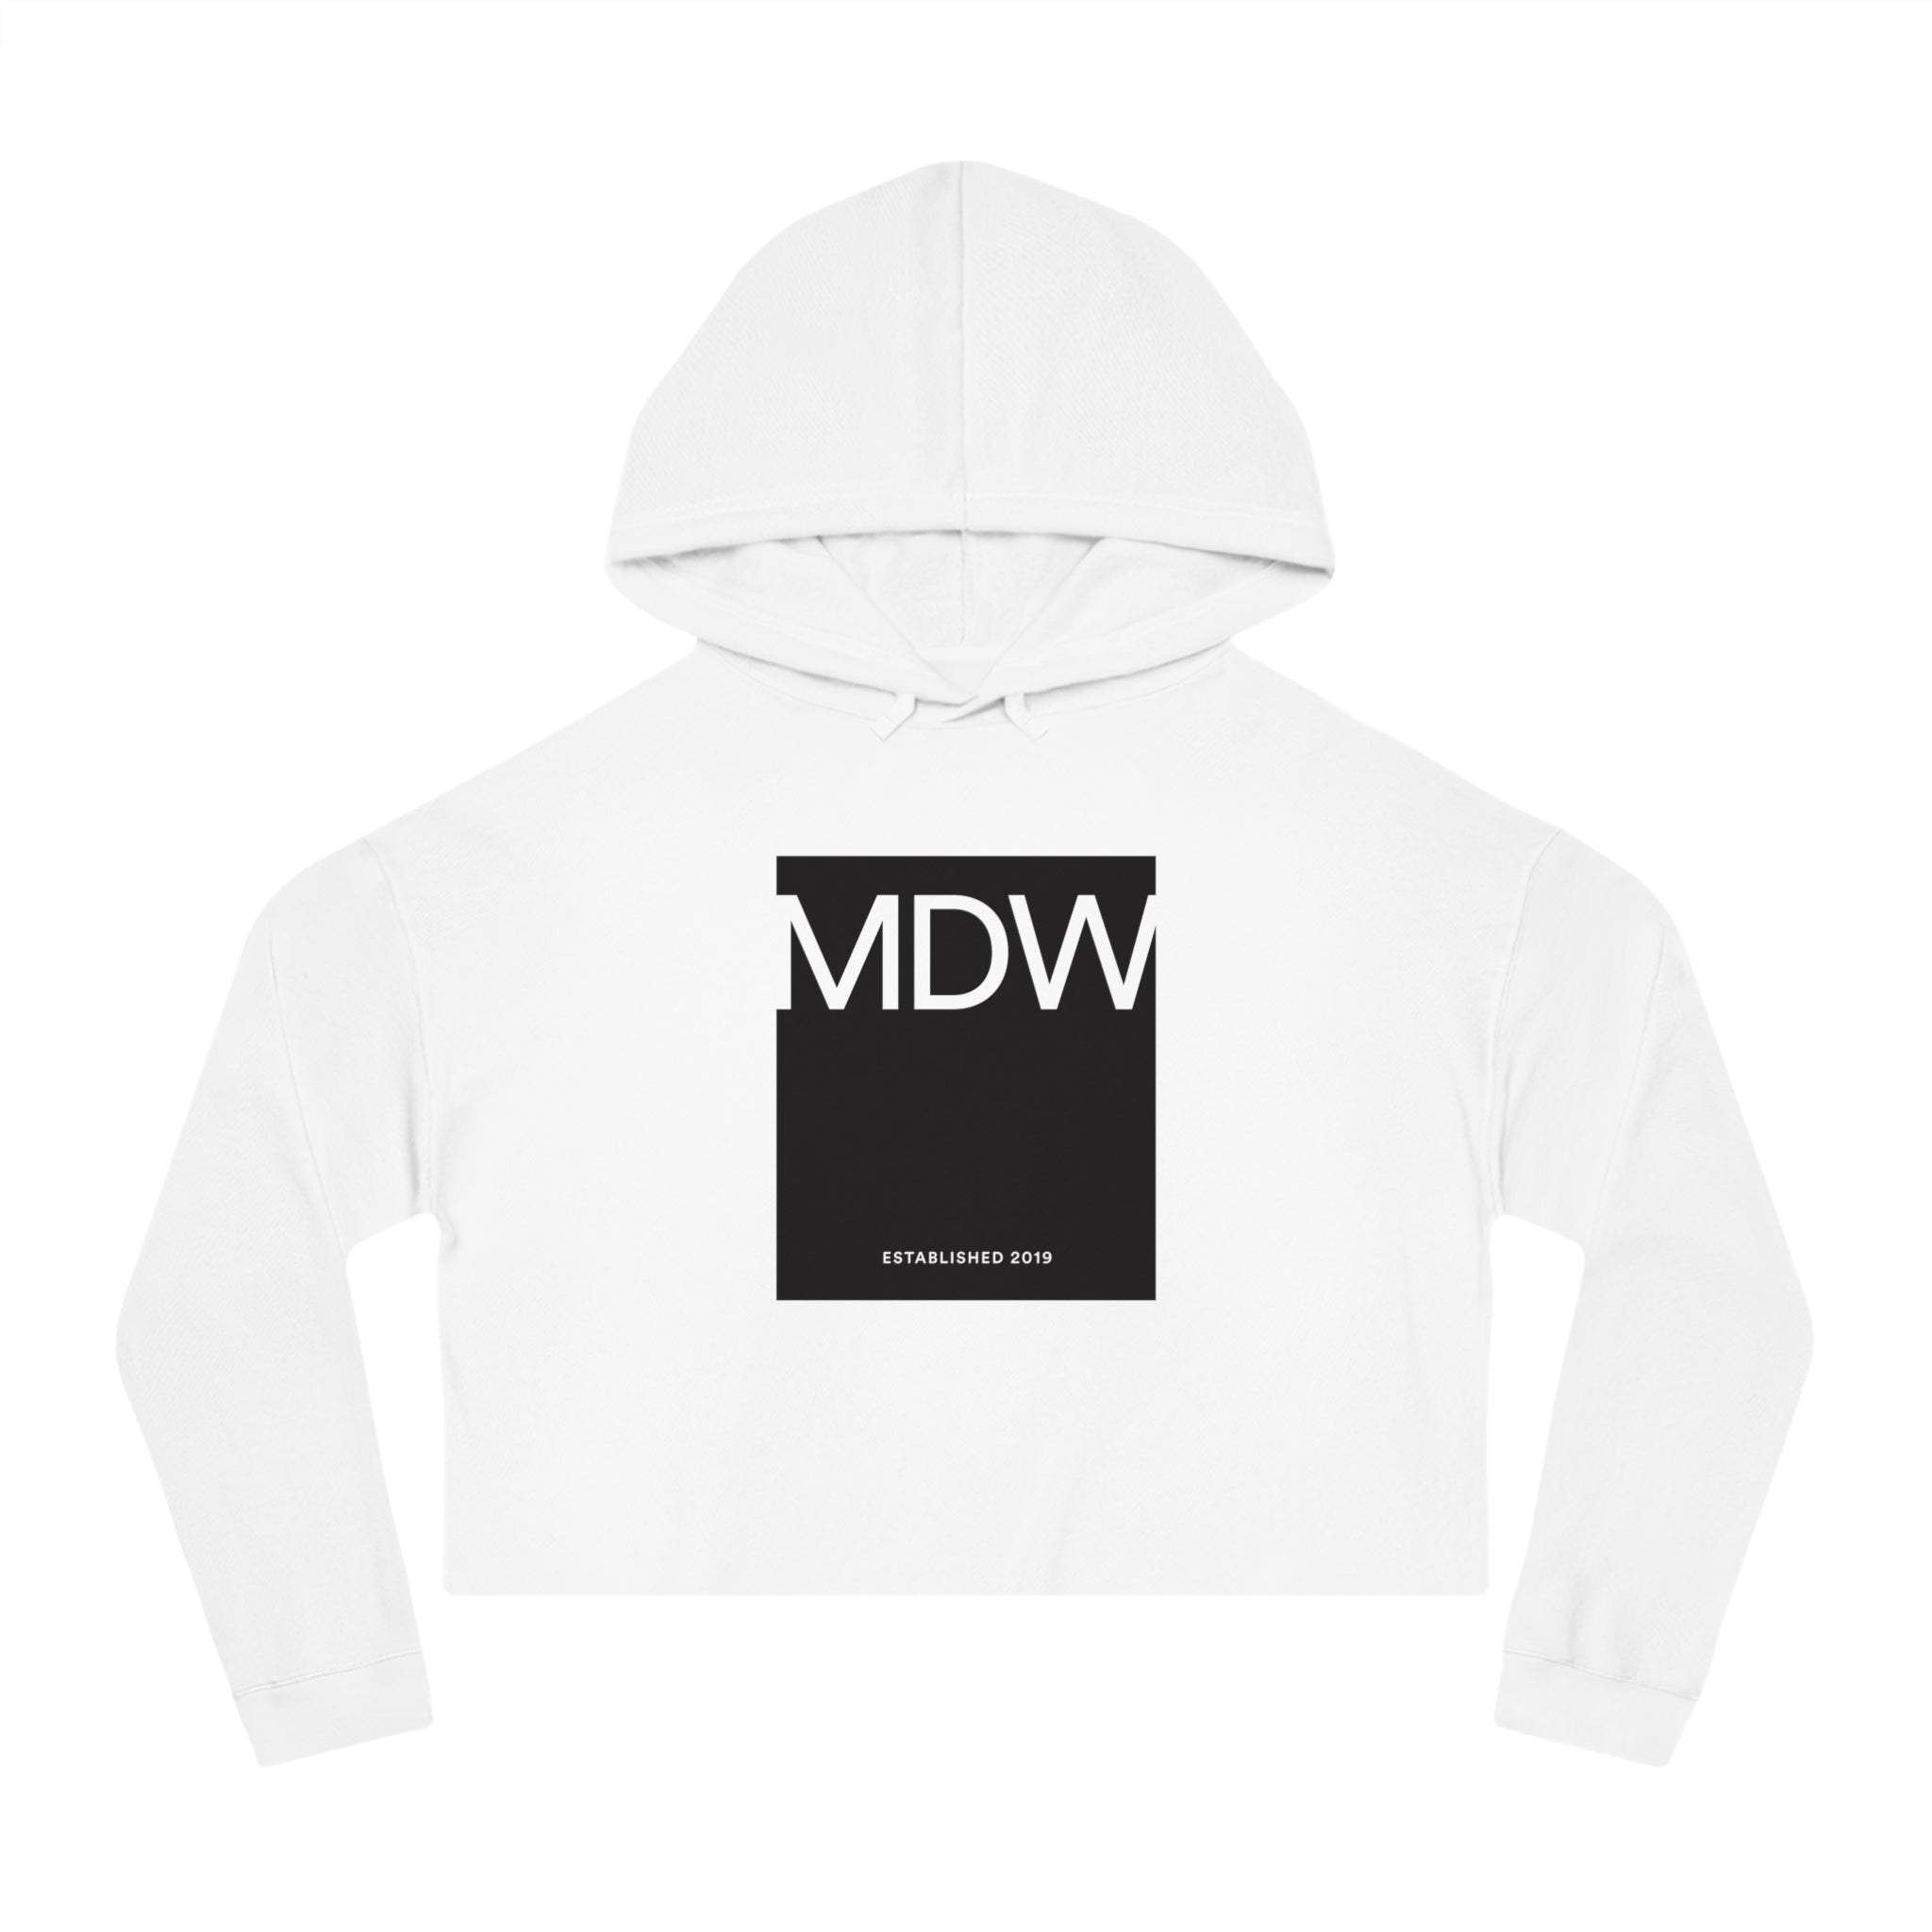 MDW Cropped Hooded Sweatshirt